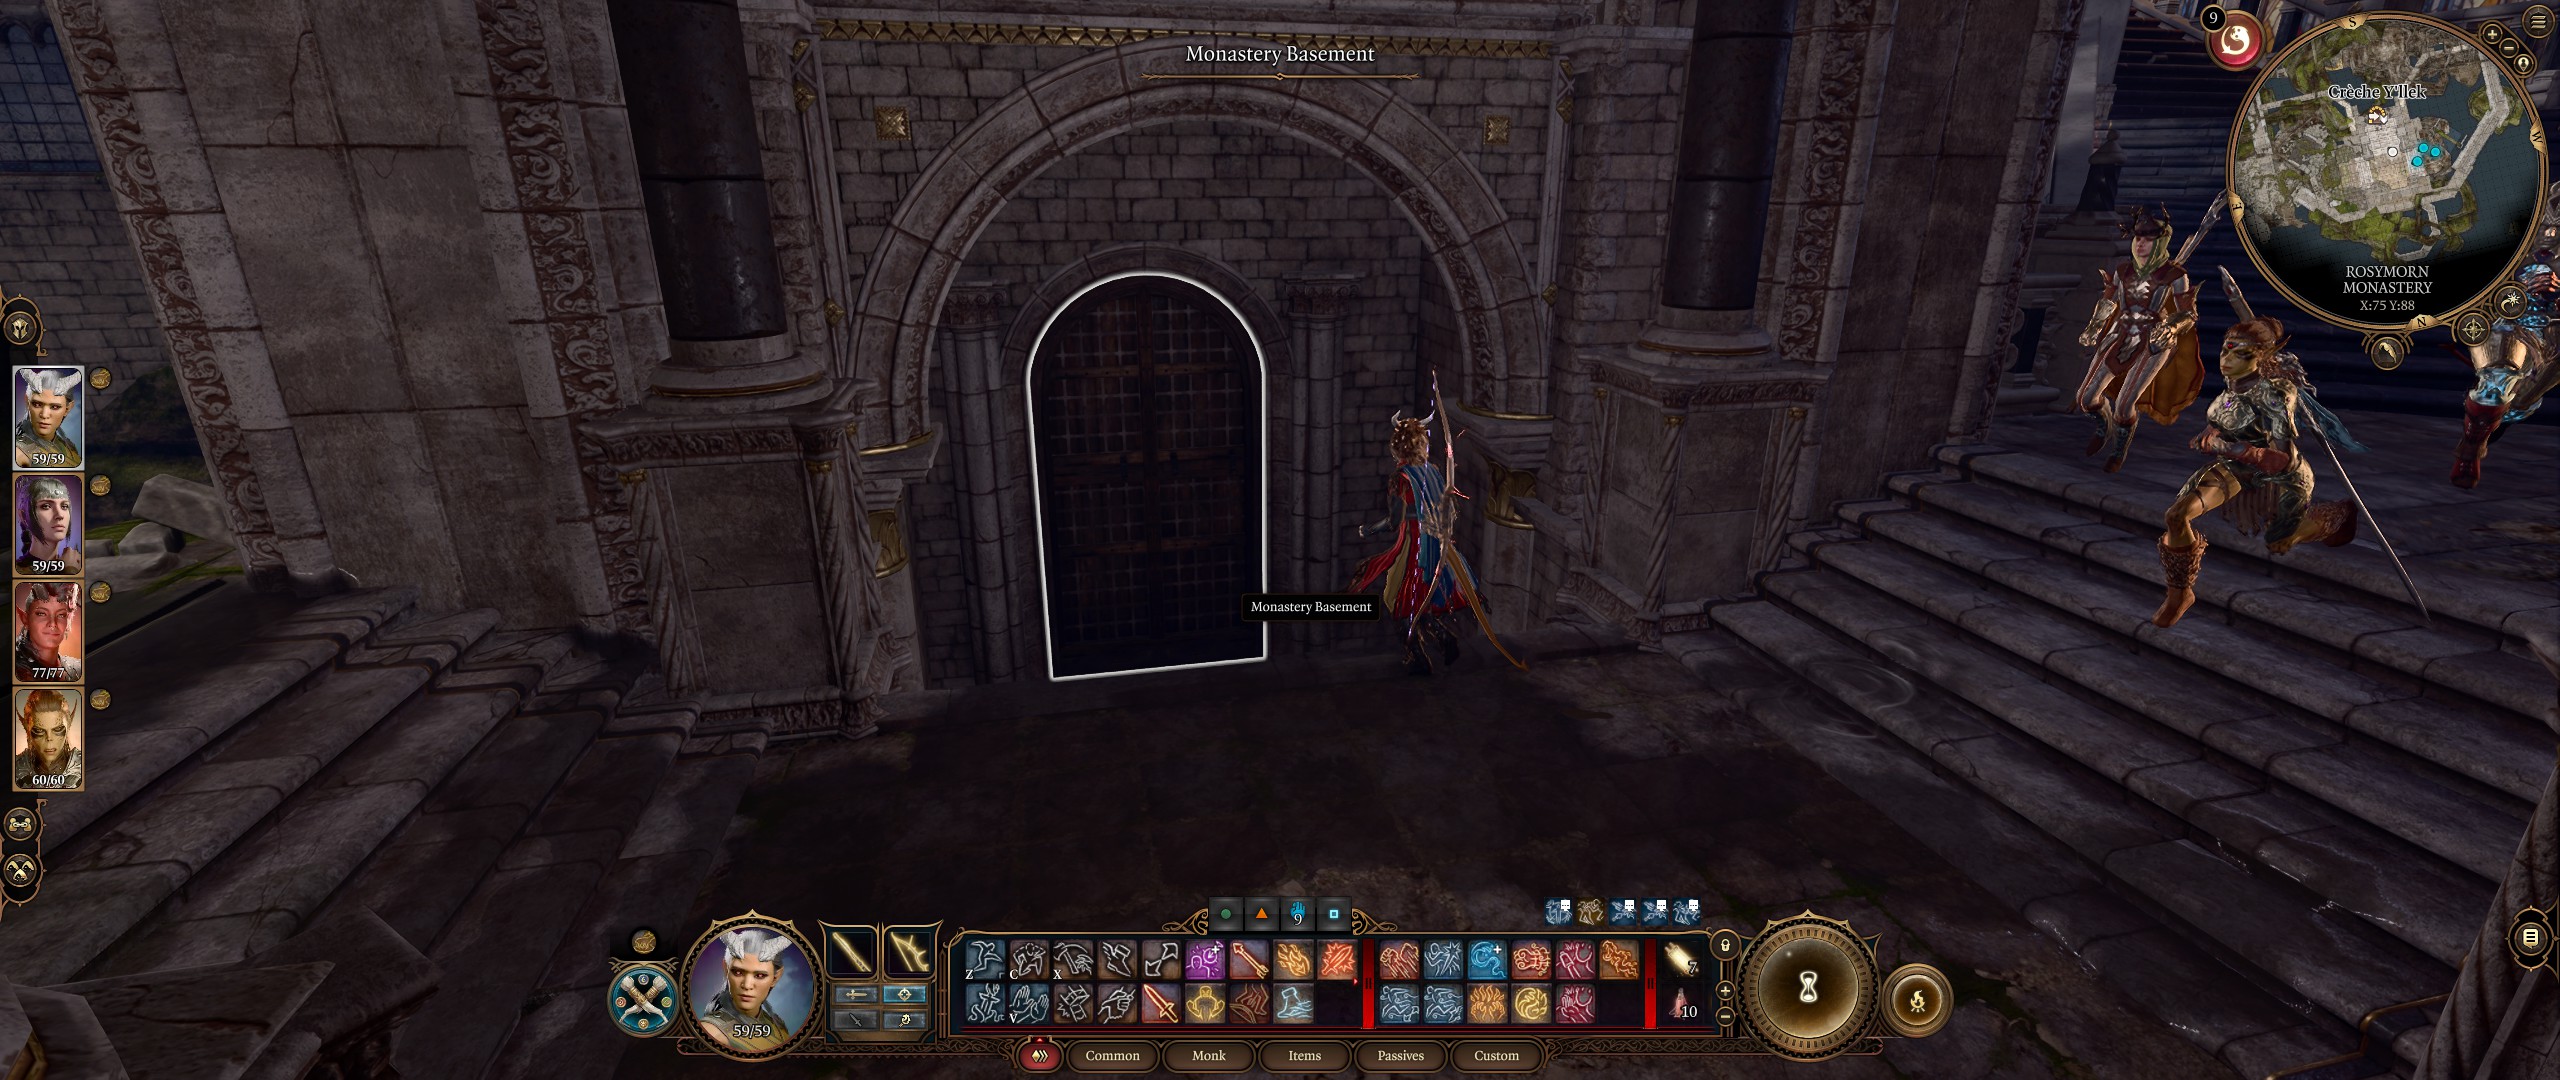 Find the Monastery Basement door to enter the creché.